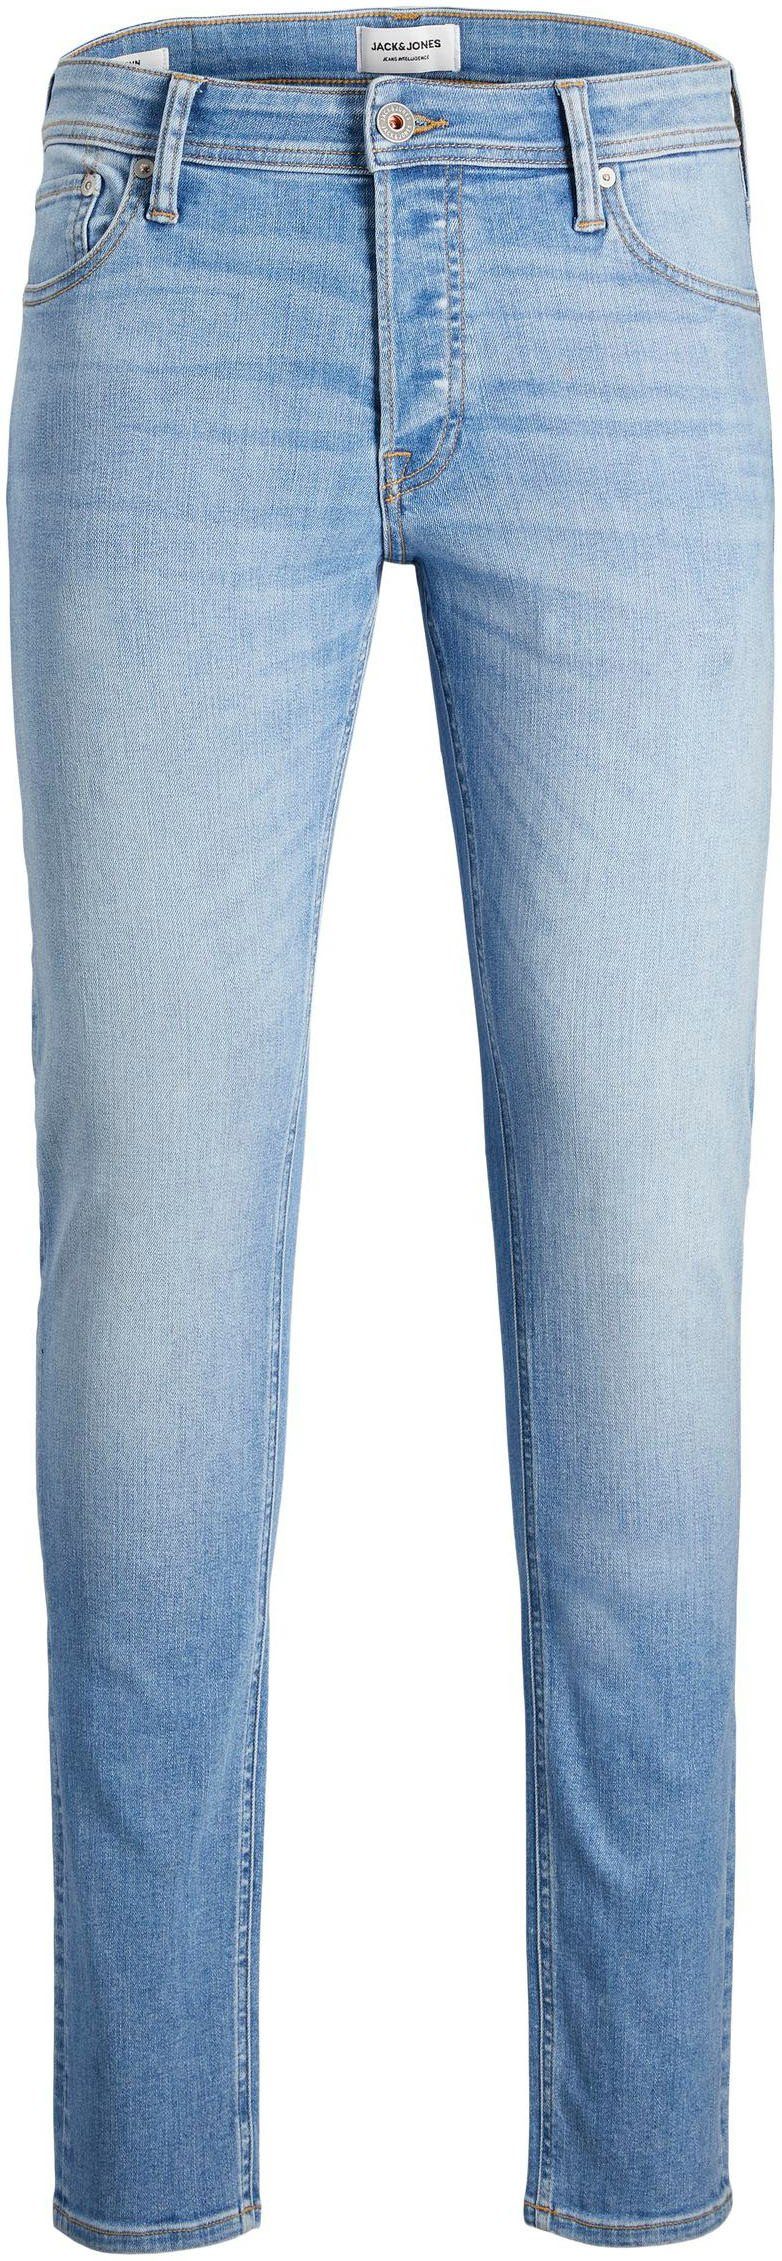 MIKE Comfort-fit-Jeans light-blue-denim & Jack Jones